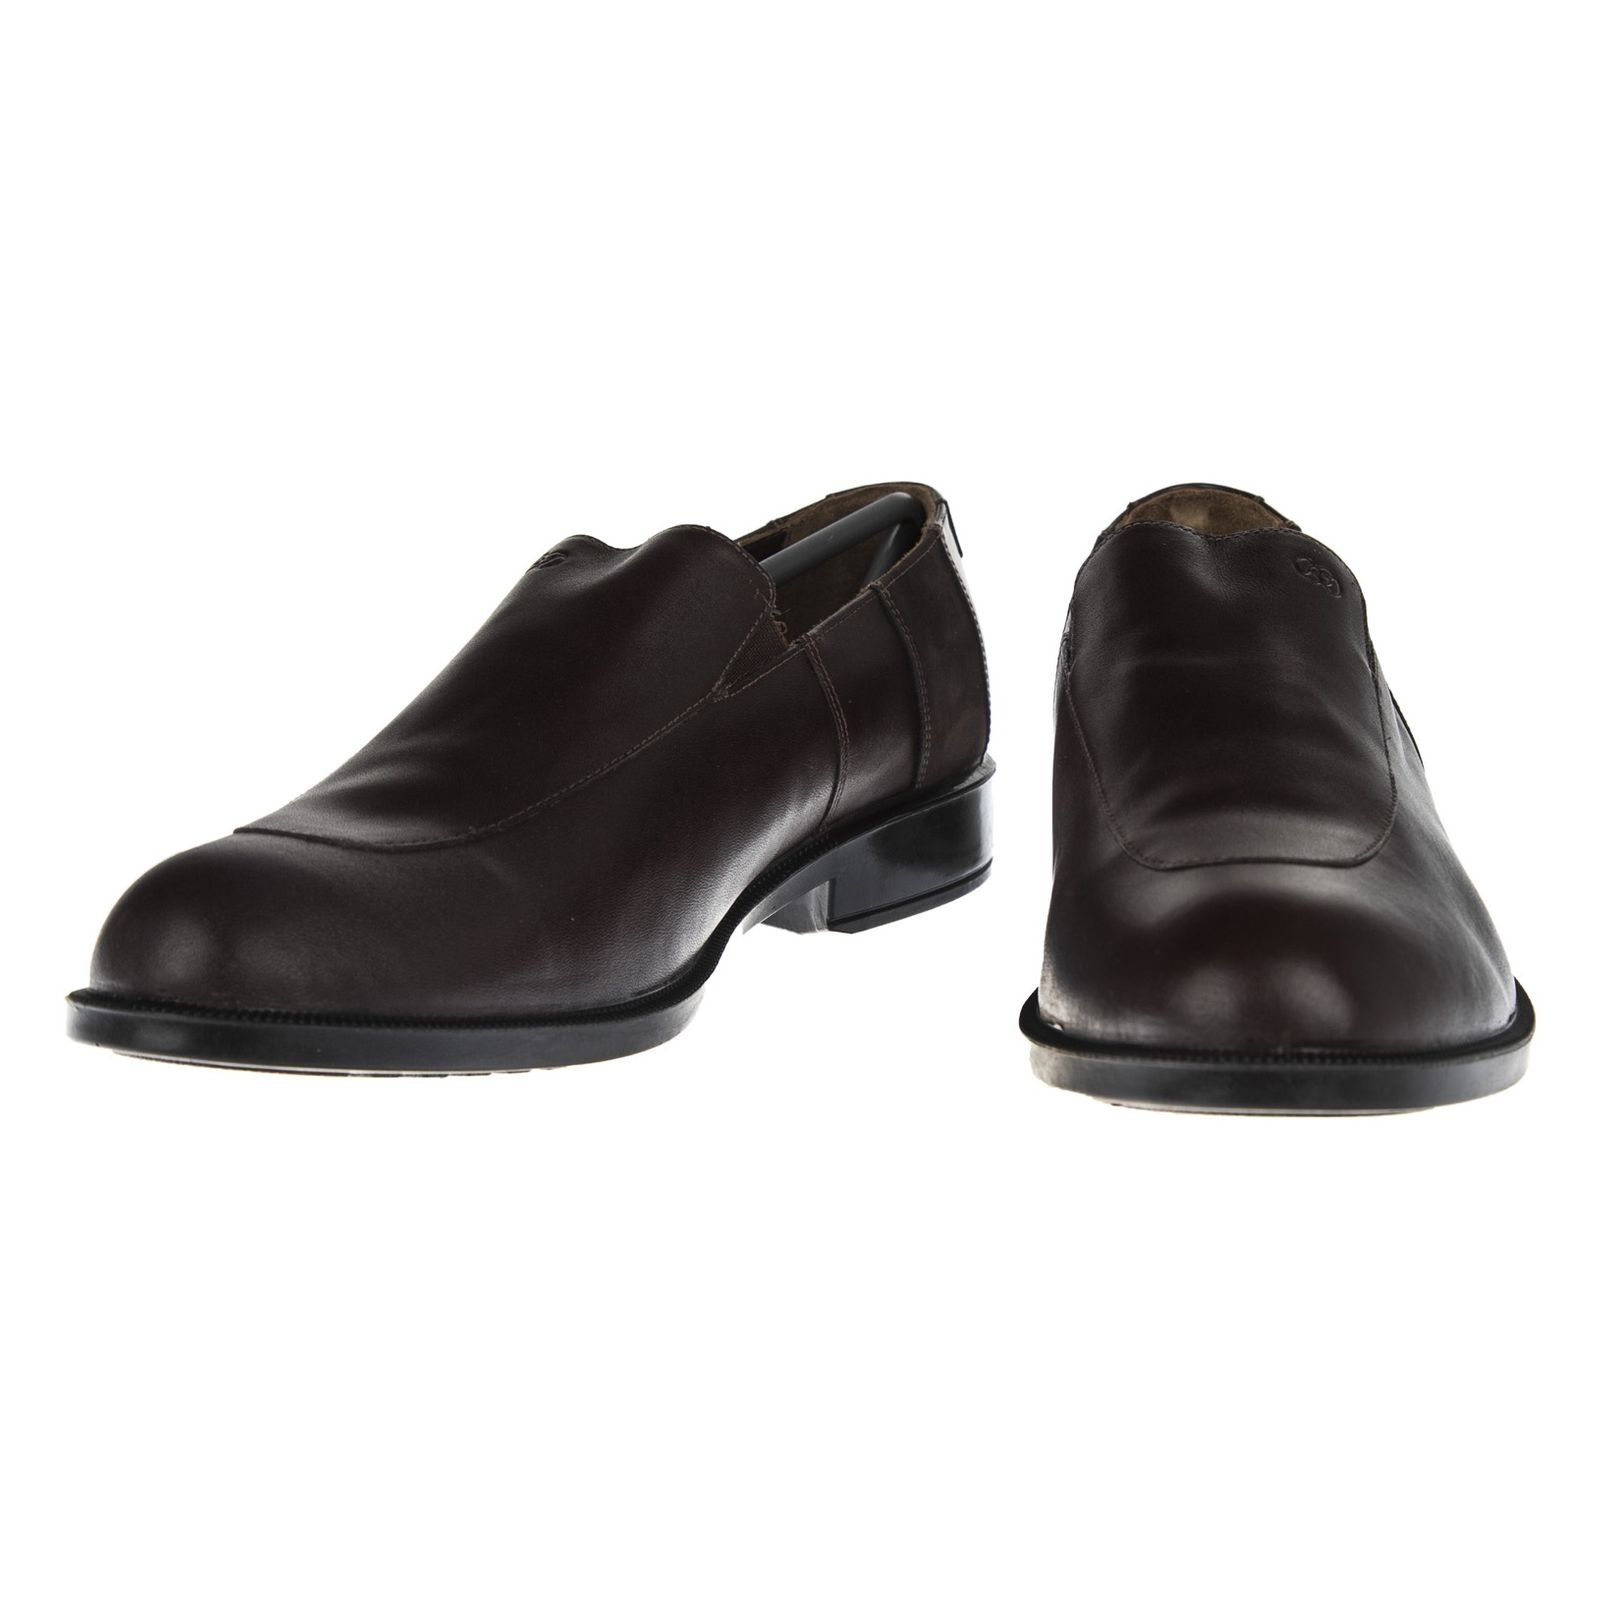 کفش مردانه دنیلی مدل 209110136019 -  - 6